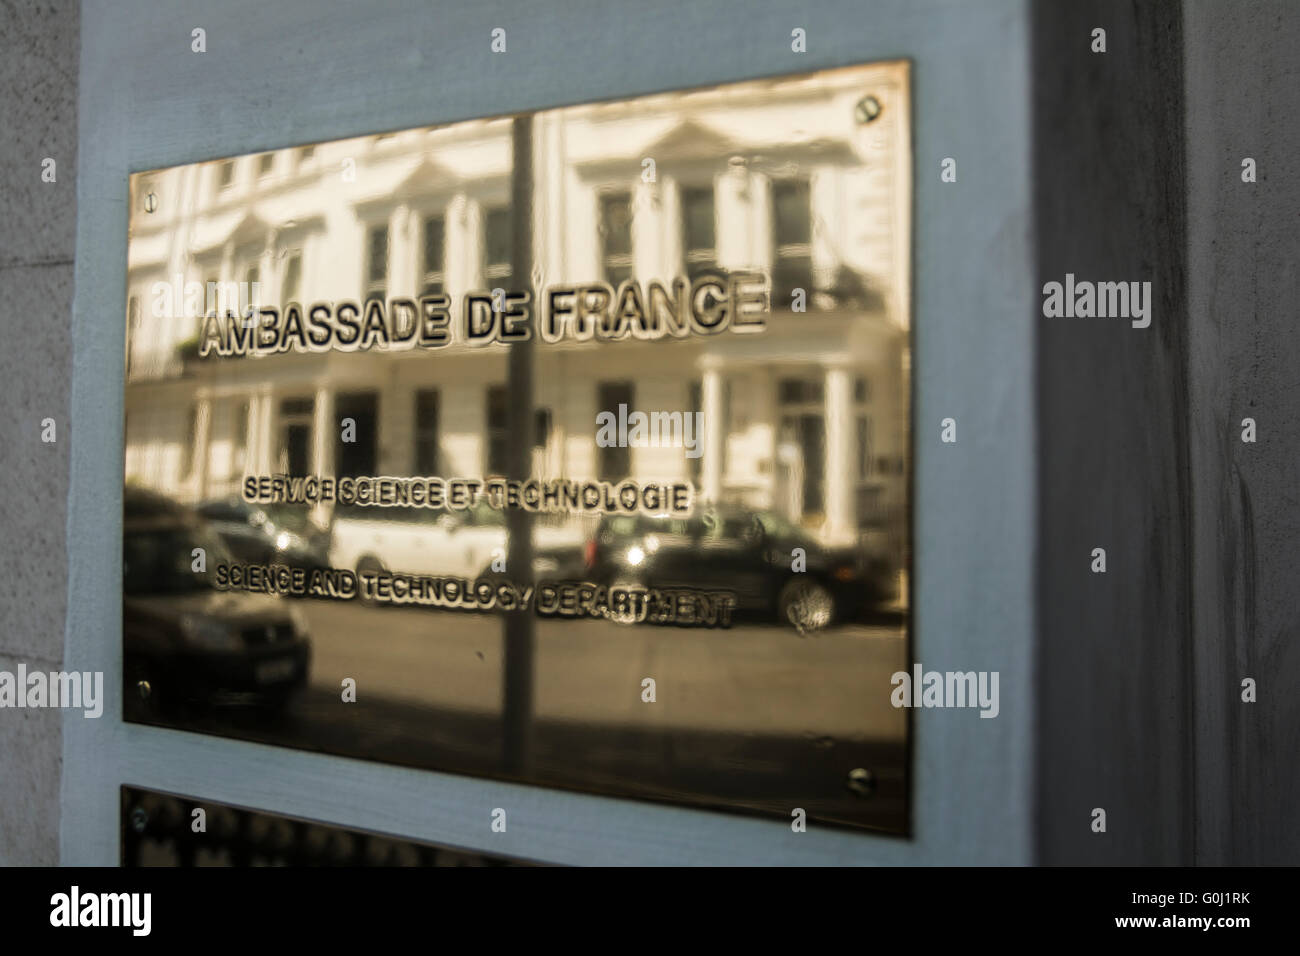 Ambassade De France plaque, South Kensington, London, England, U.K. Stock Photo